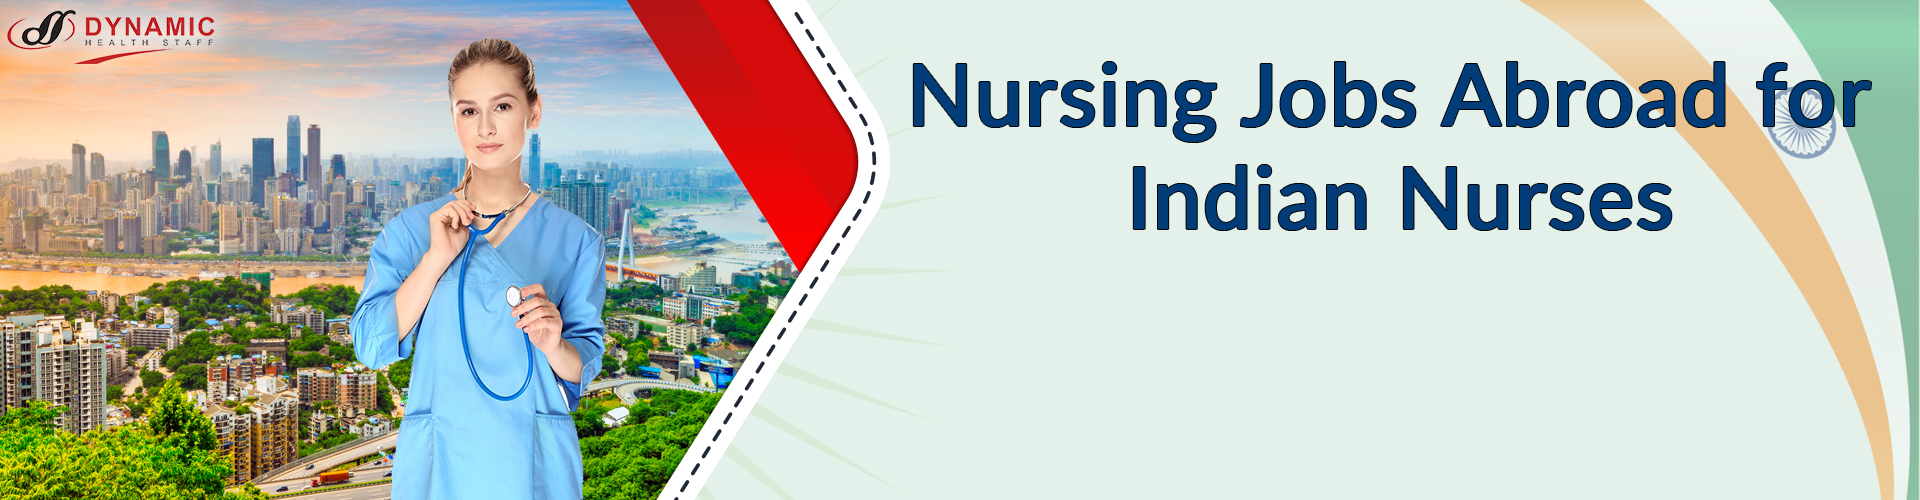 Nursing Jobs Abroad for Indian Nurses